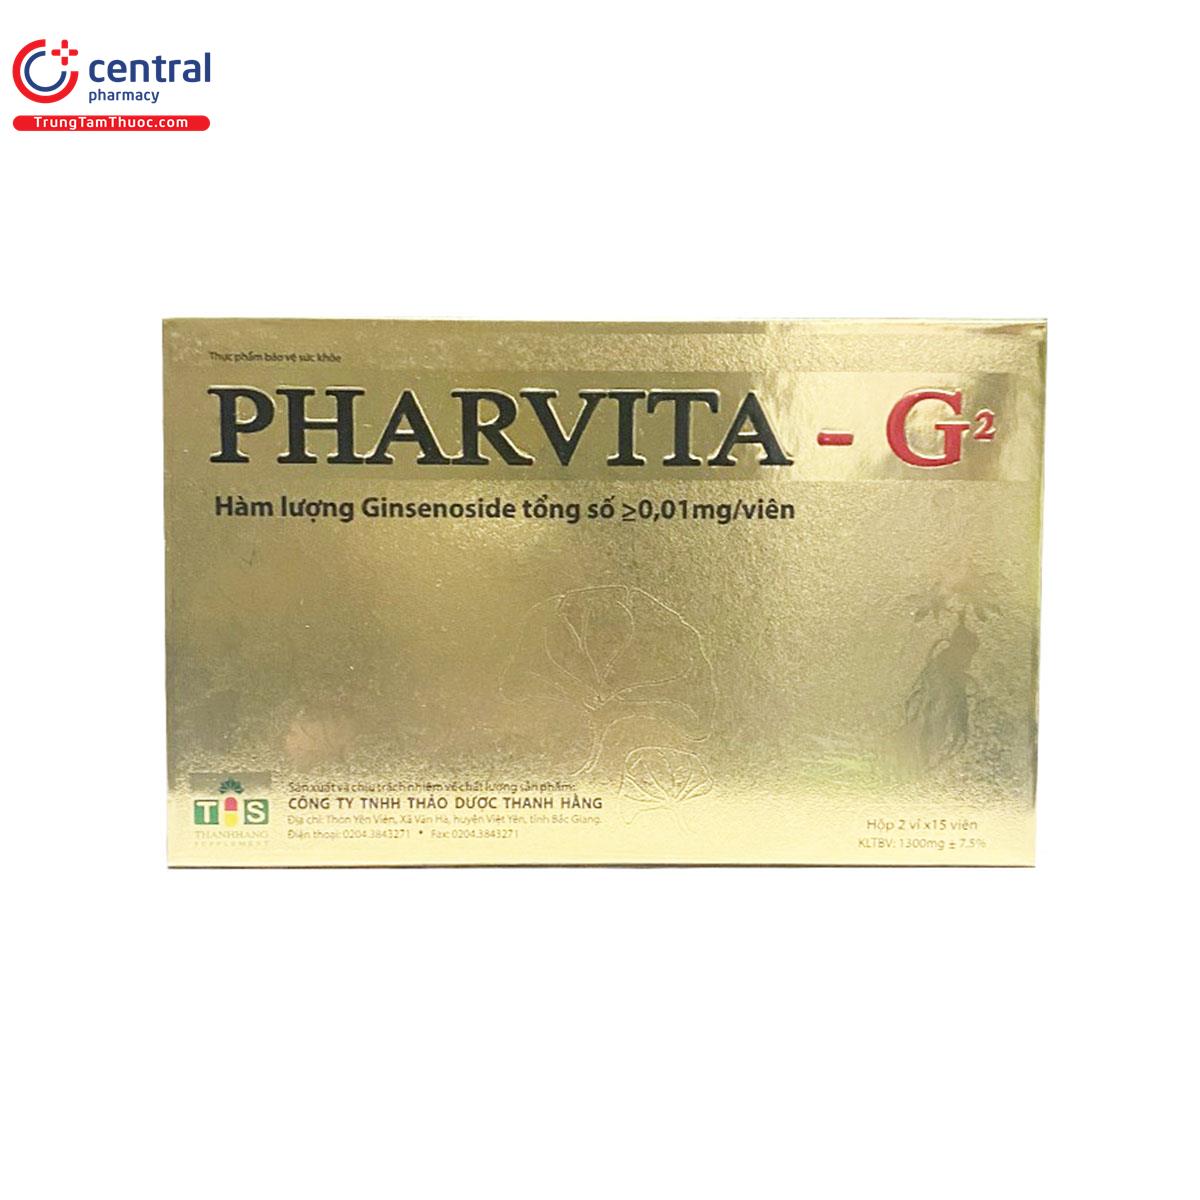 pharvita g2 3 O6018